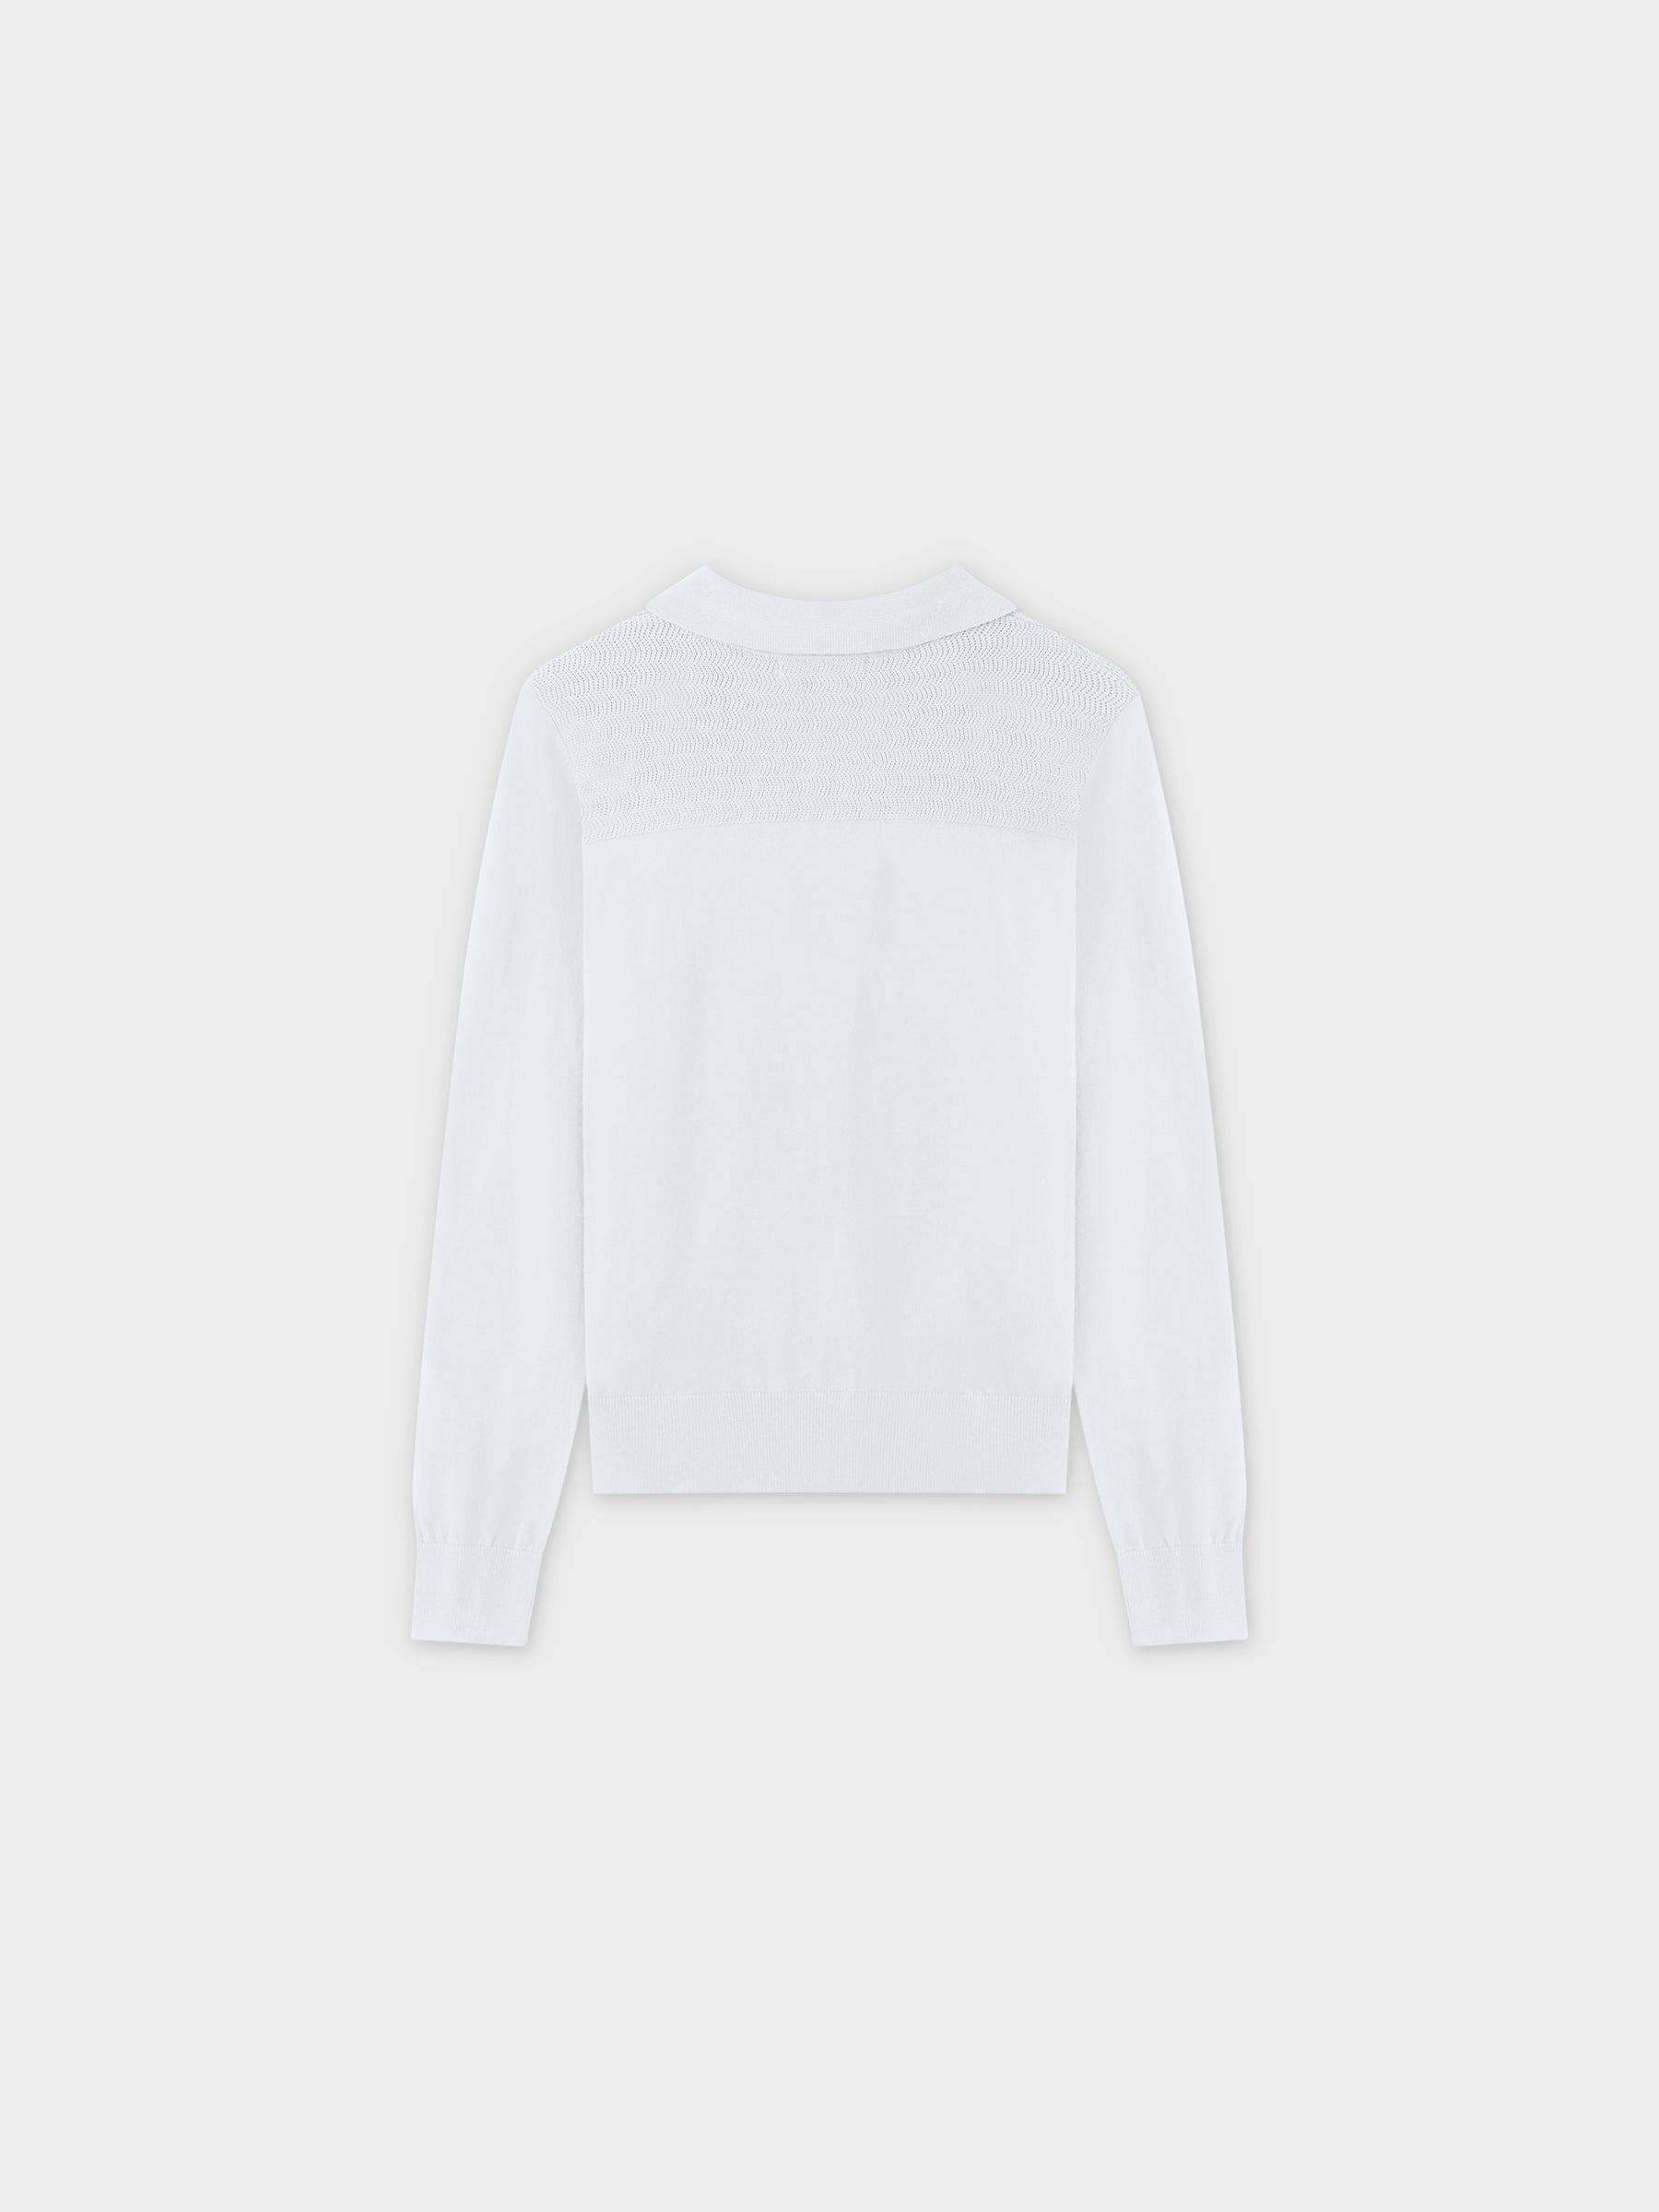 Mesh Top Sweater-White